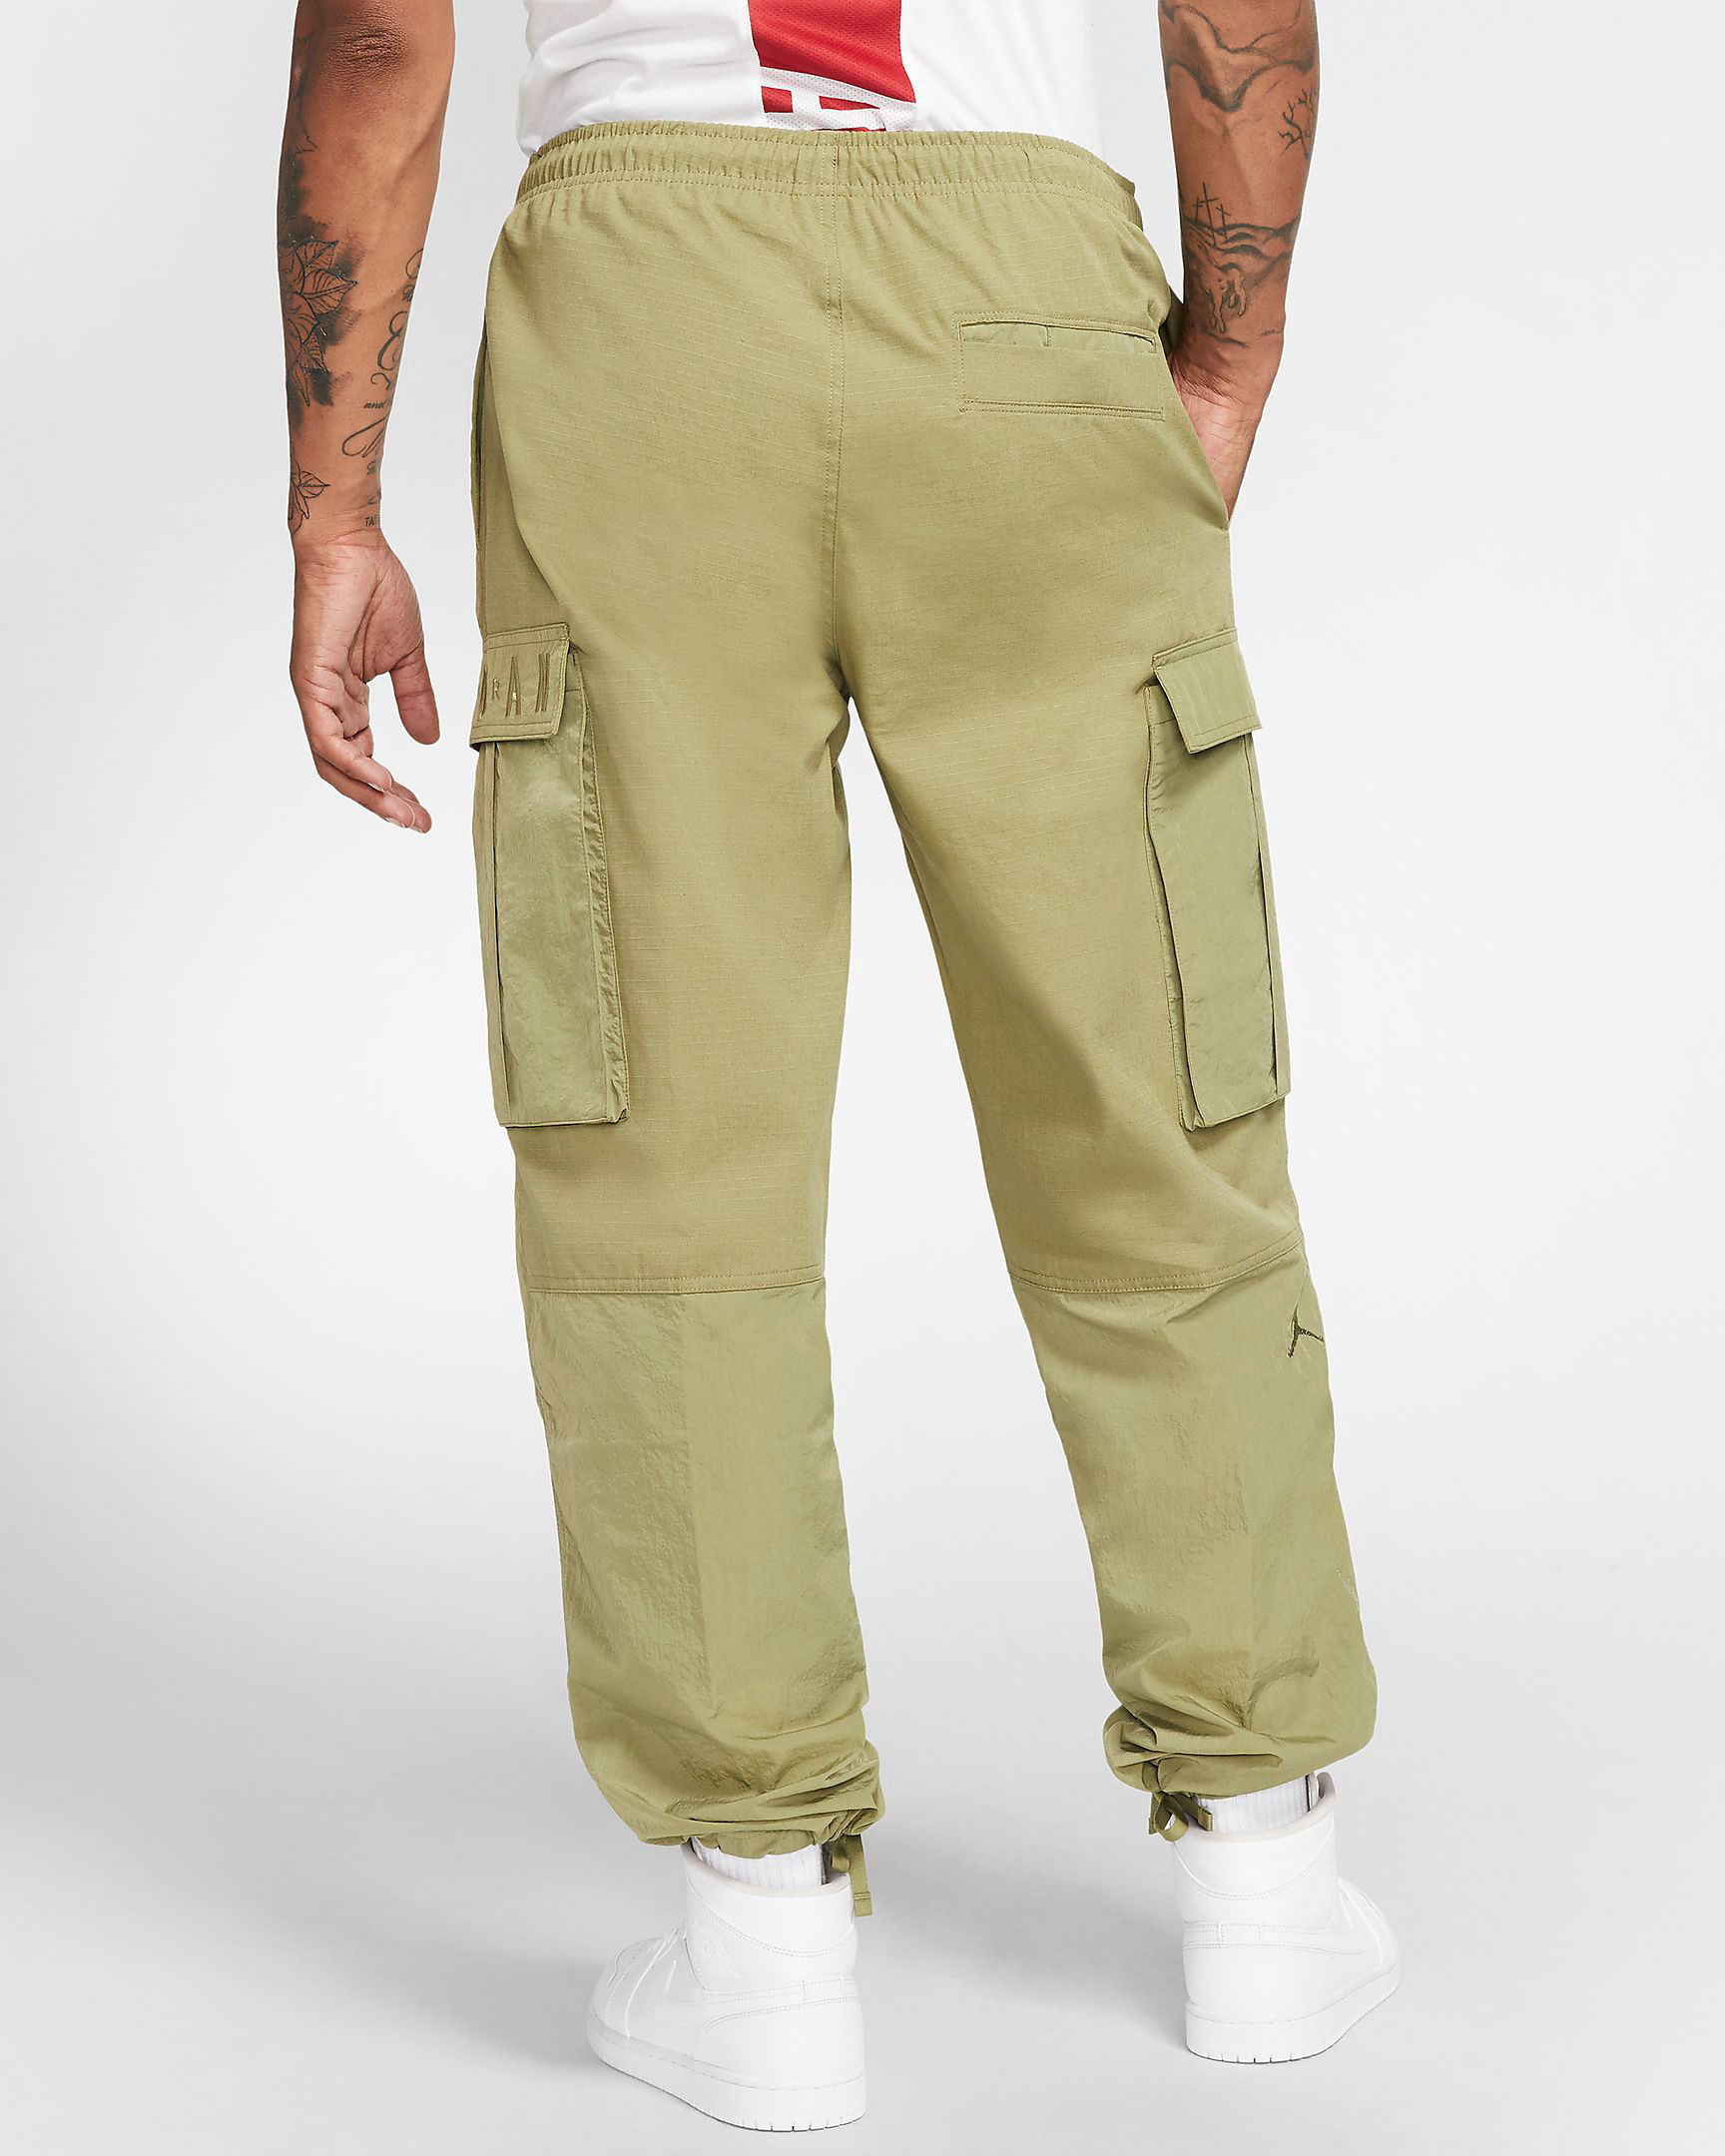 jordan-green-cargo-pants-2